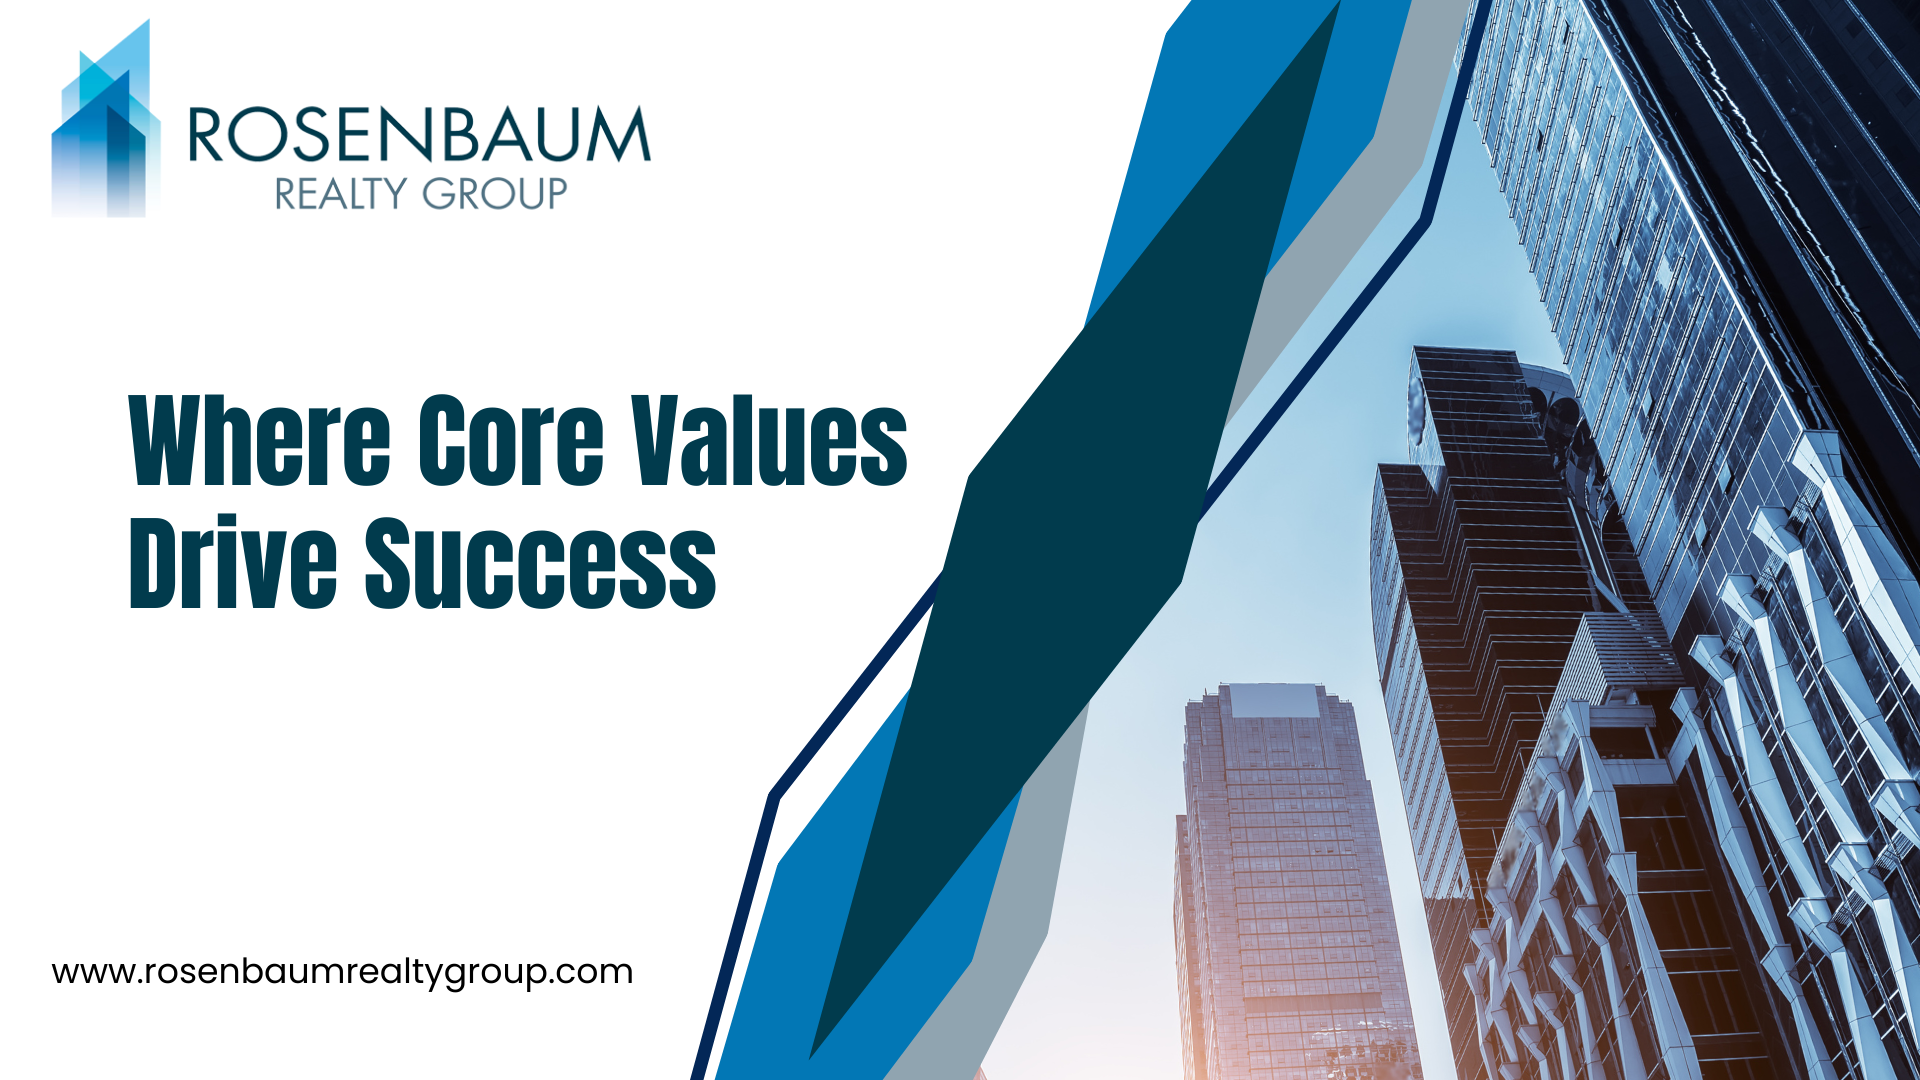 Rosenbaum Realty Group: Where Core Values Drive Success